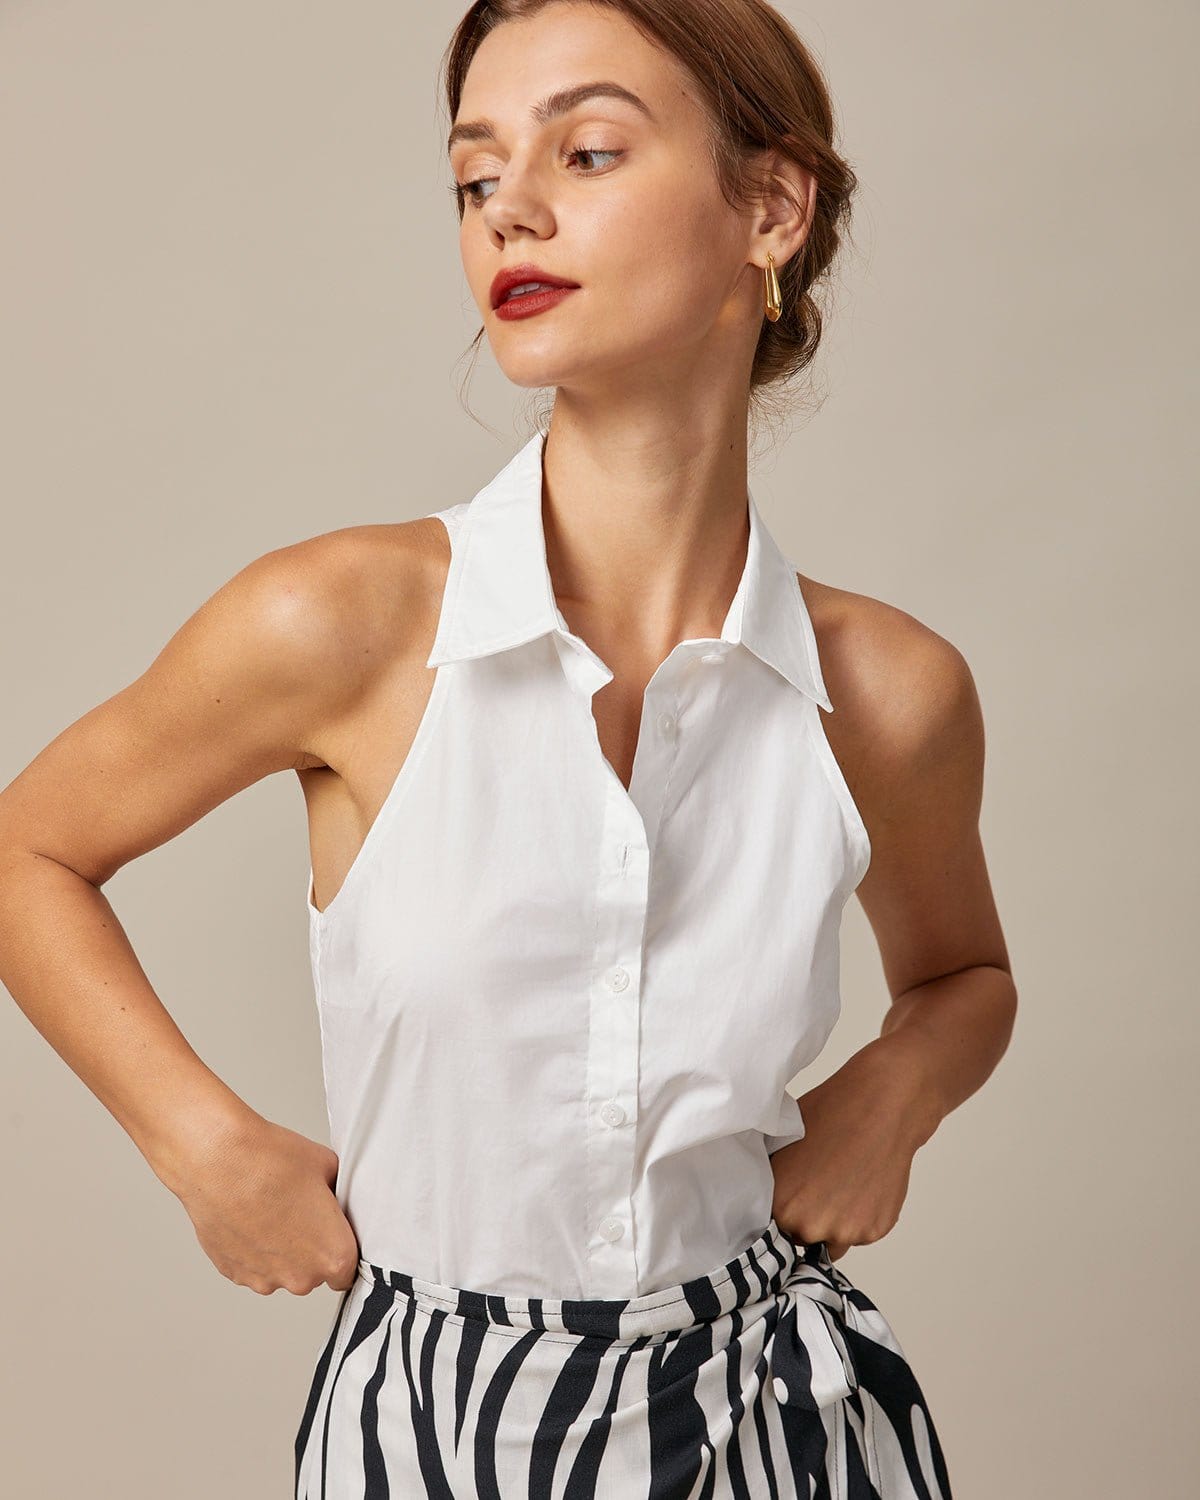 Women's Sleeveless Shirts, Blouses & Tops